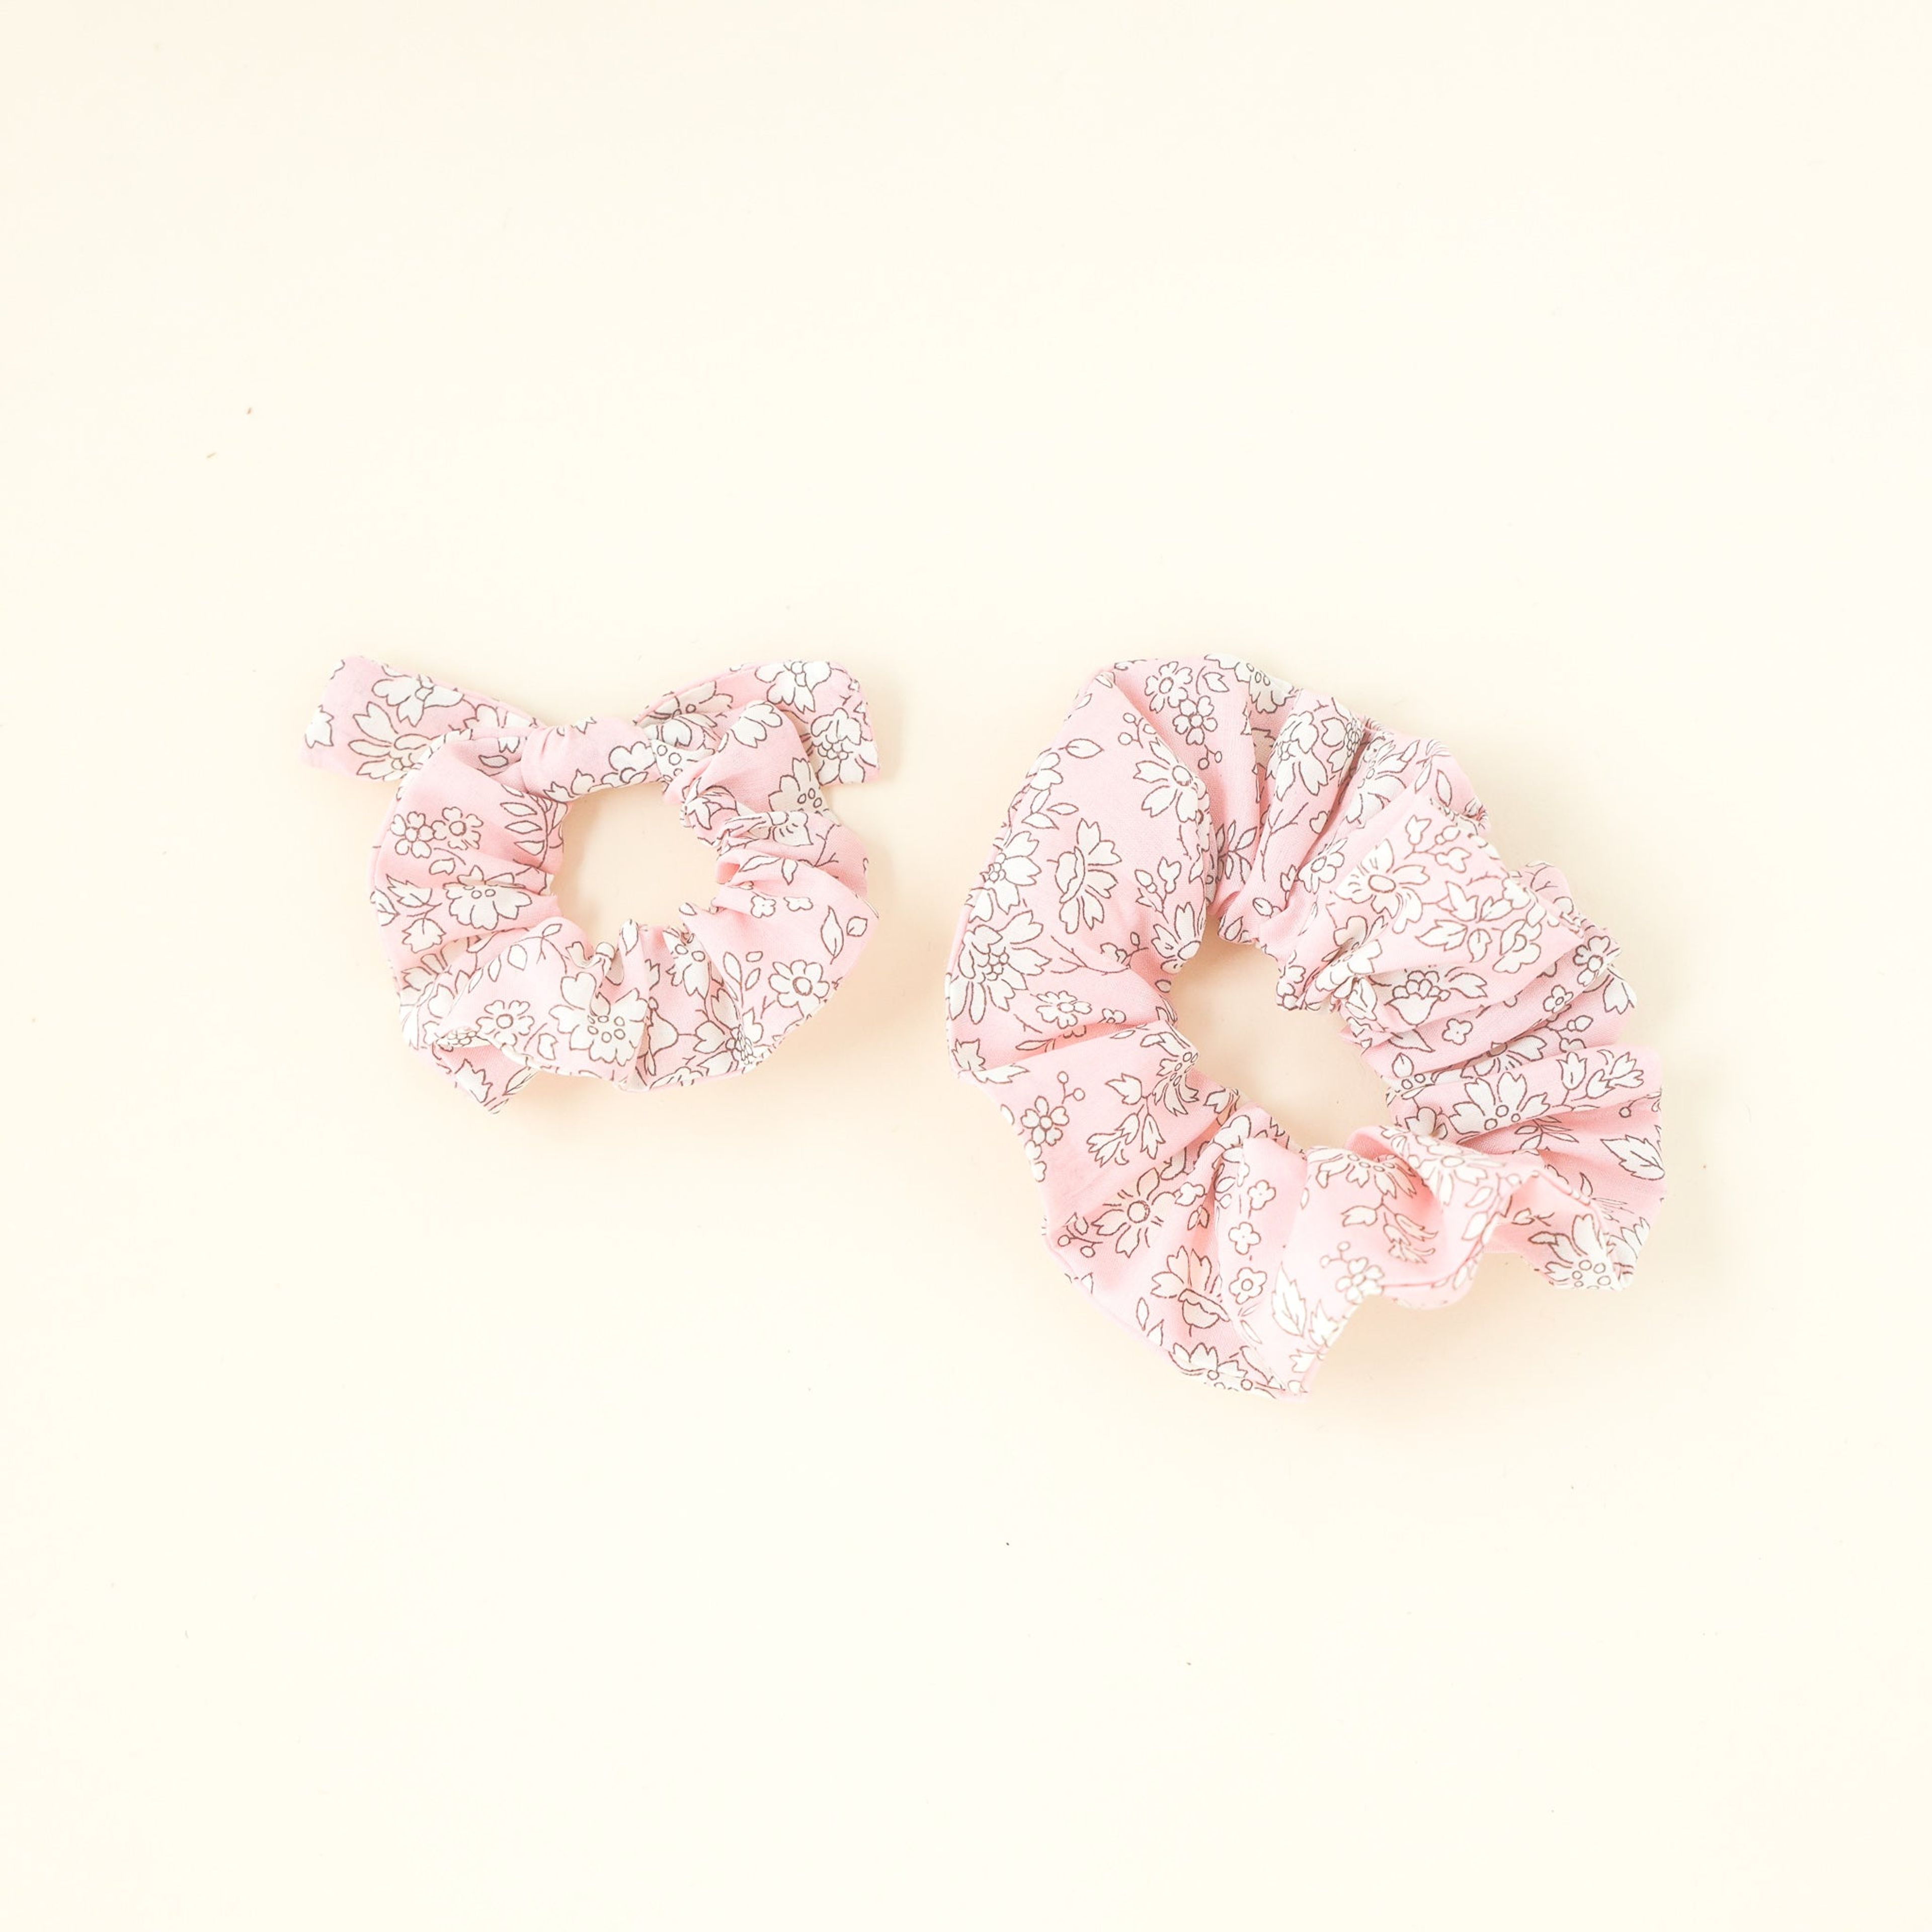 Adult Scrunchie in Light Pink Floral